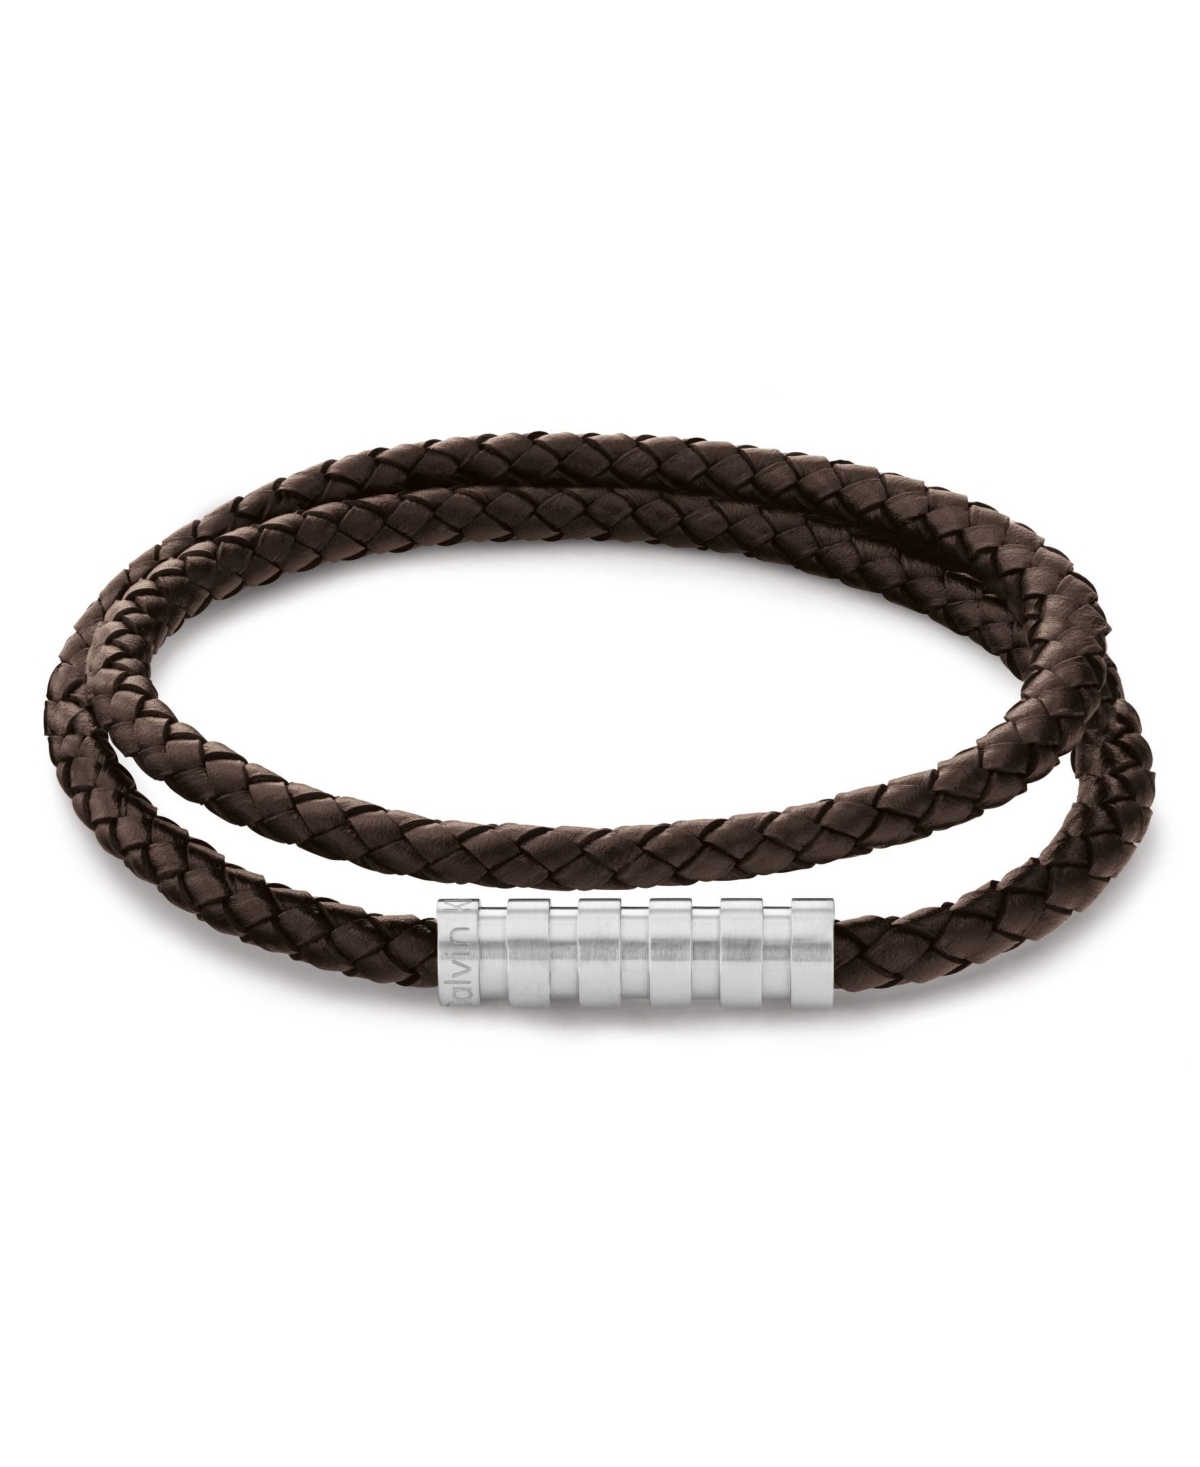 Men's Tan Leather Bracelet - Brown